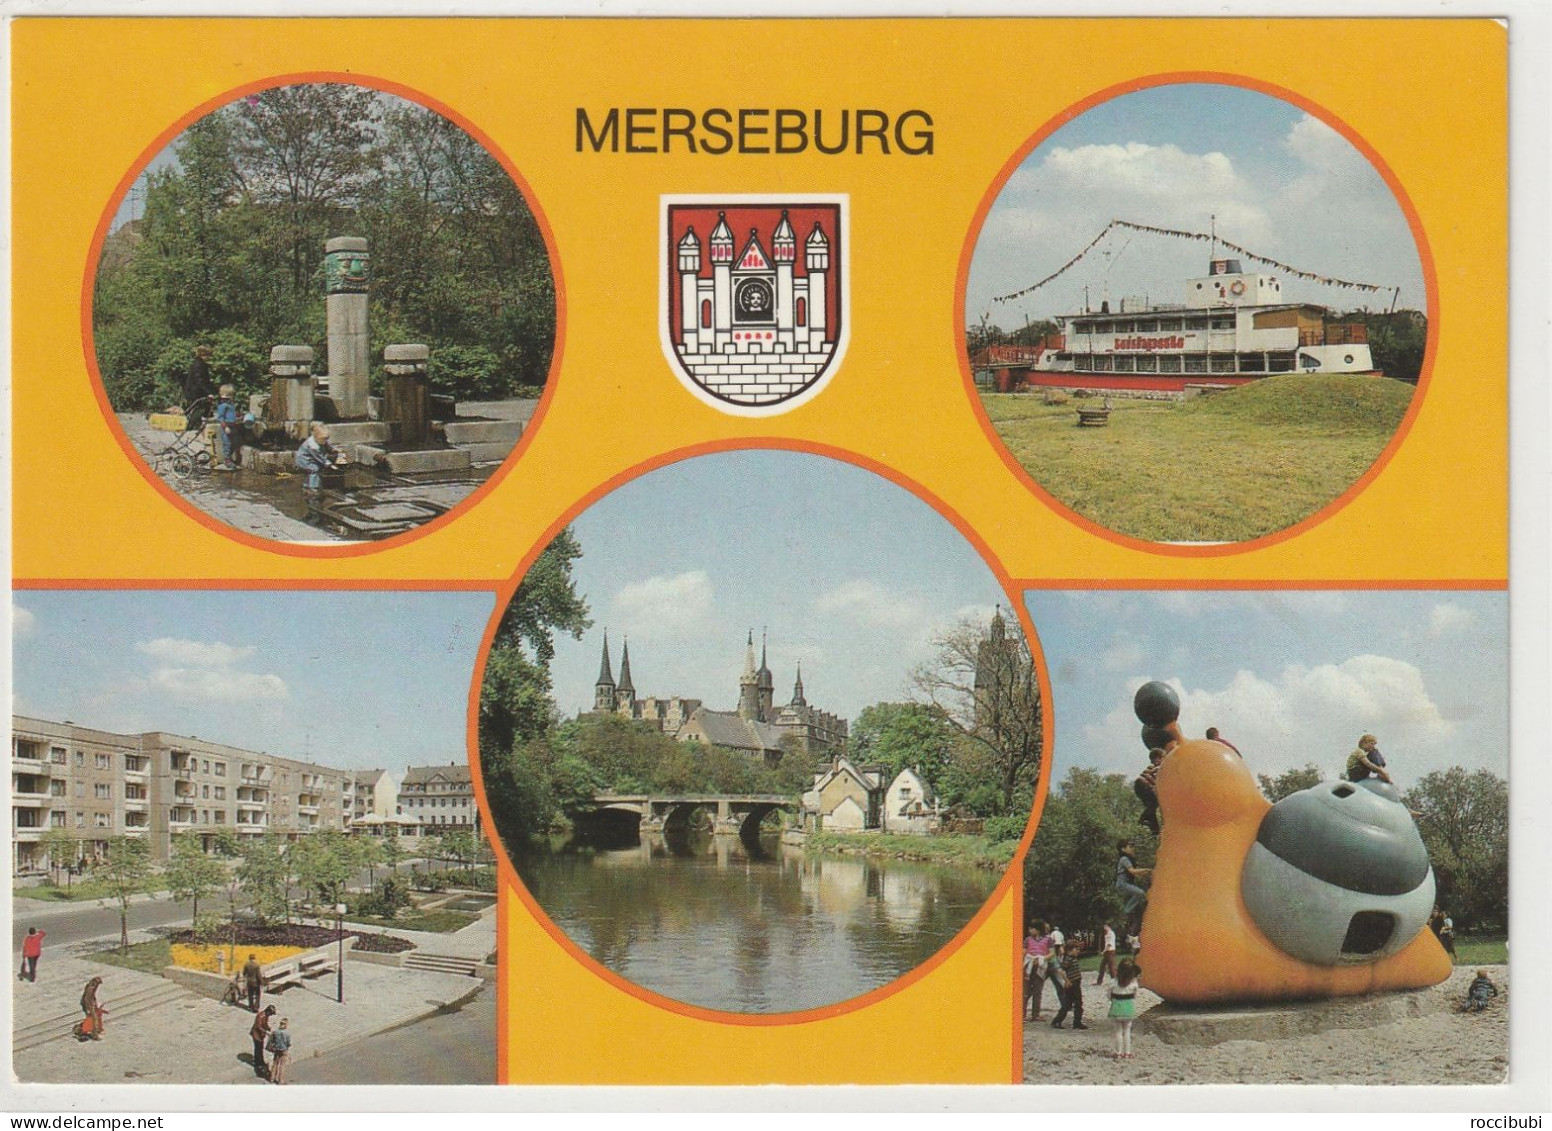 Merseburg - Merseburg